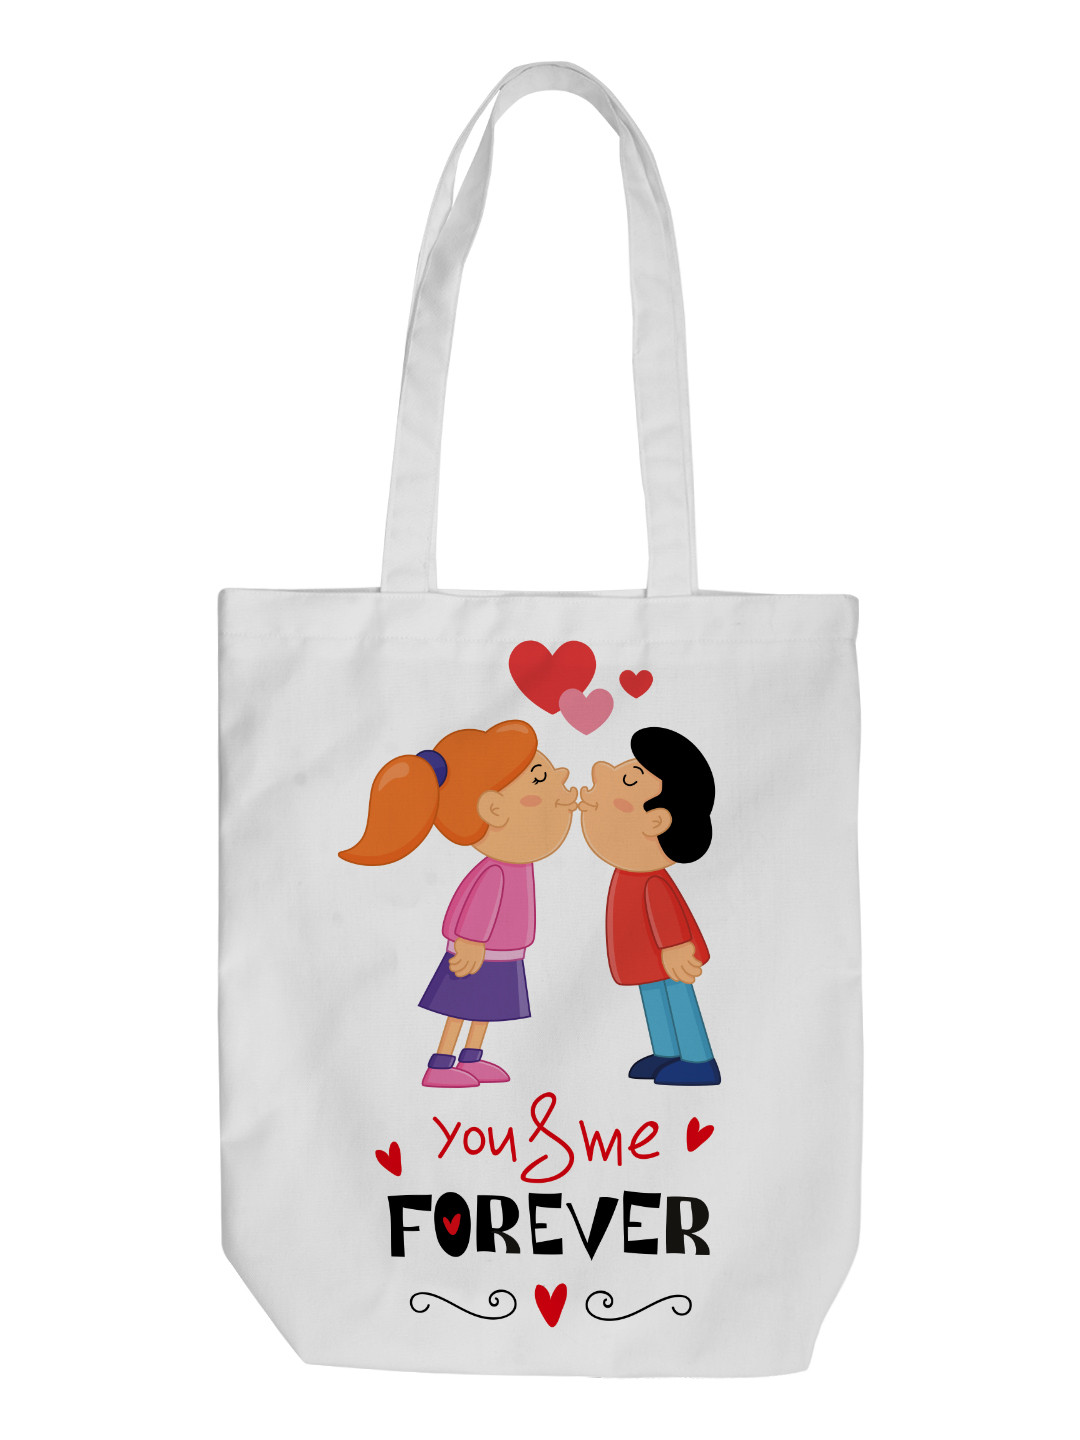 Chic Red Heart Purse, Shoulder Bag With Chain, Handmade Felt Handbag, Gift  for Girlfriend, Interchangeable Patterns - Etsy